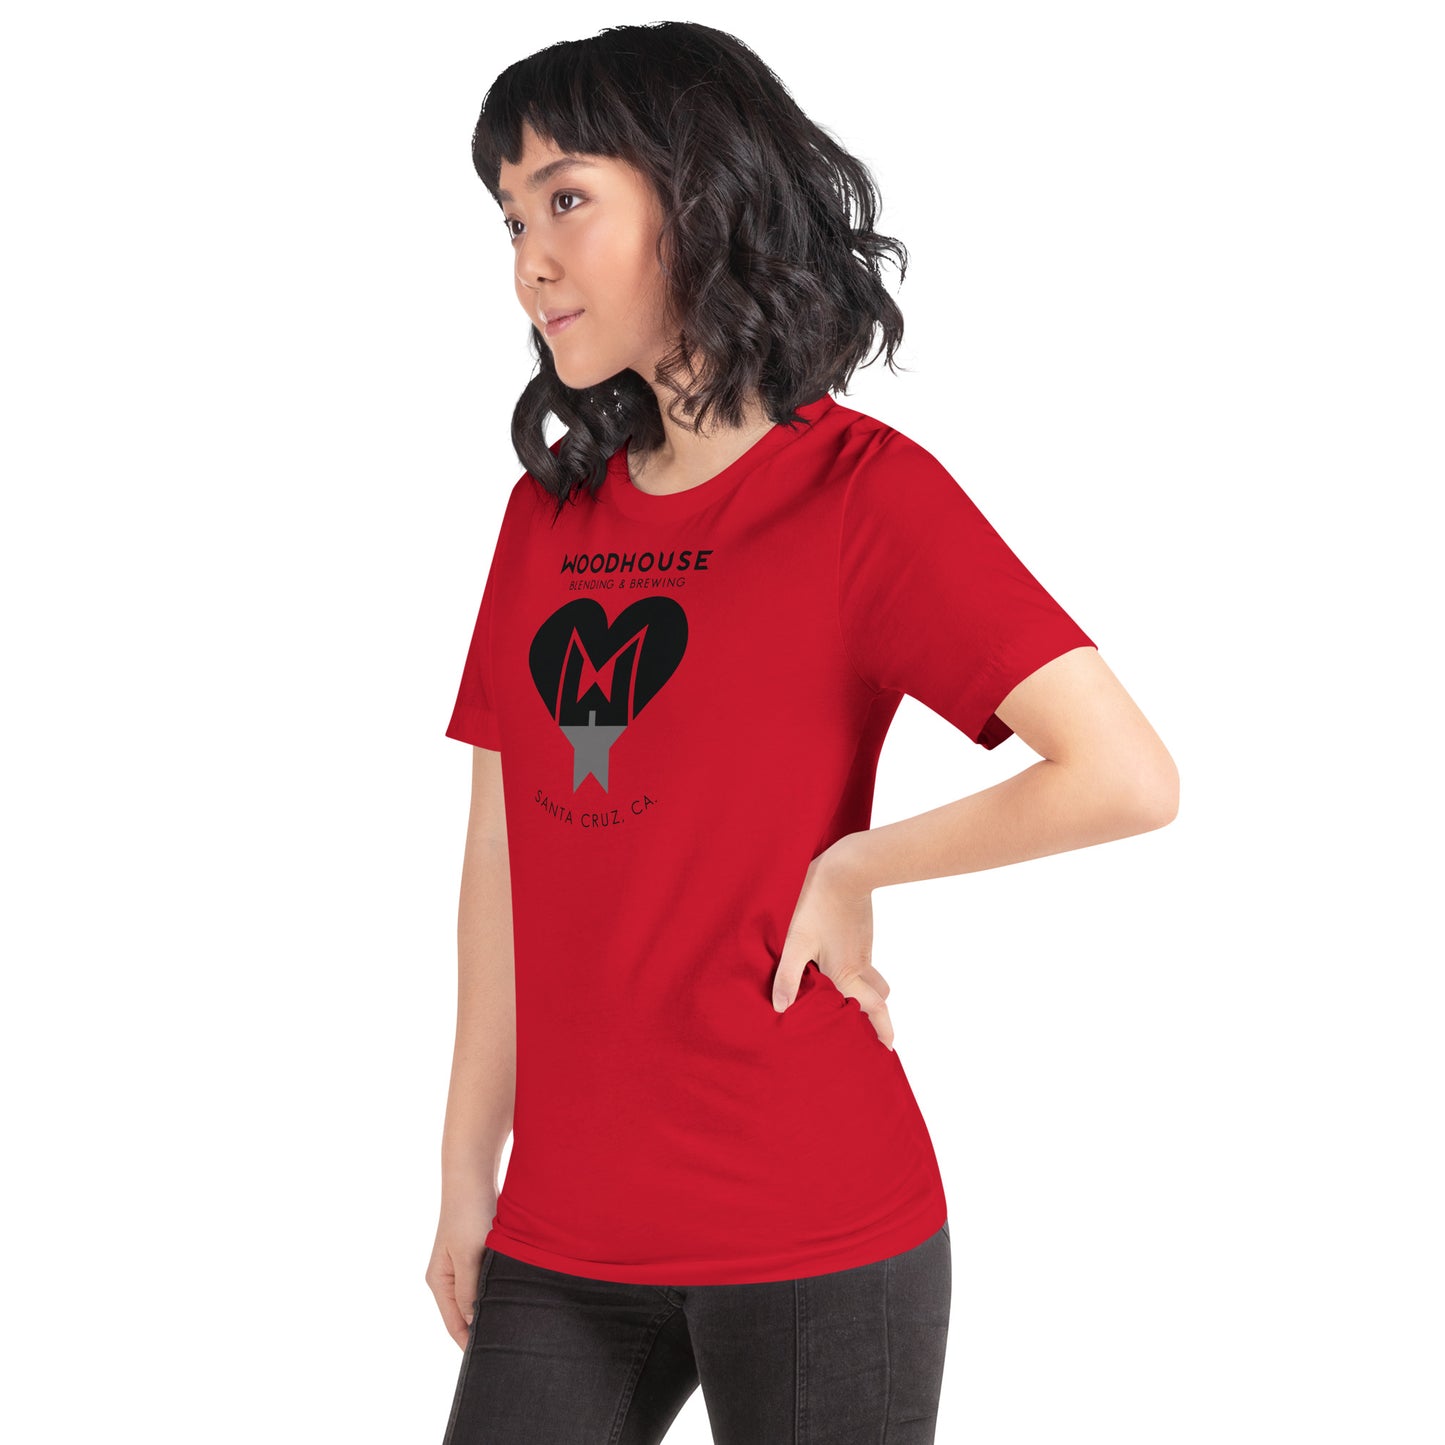 Share The Love, Unisex t-shirt